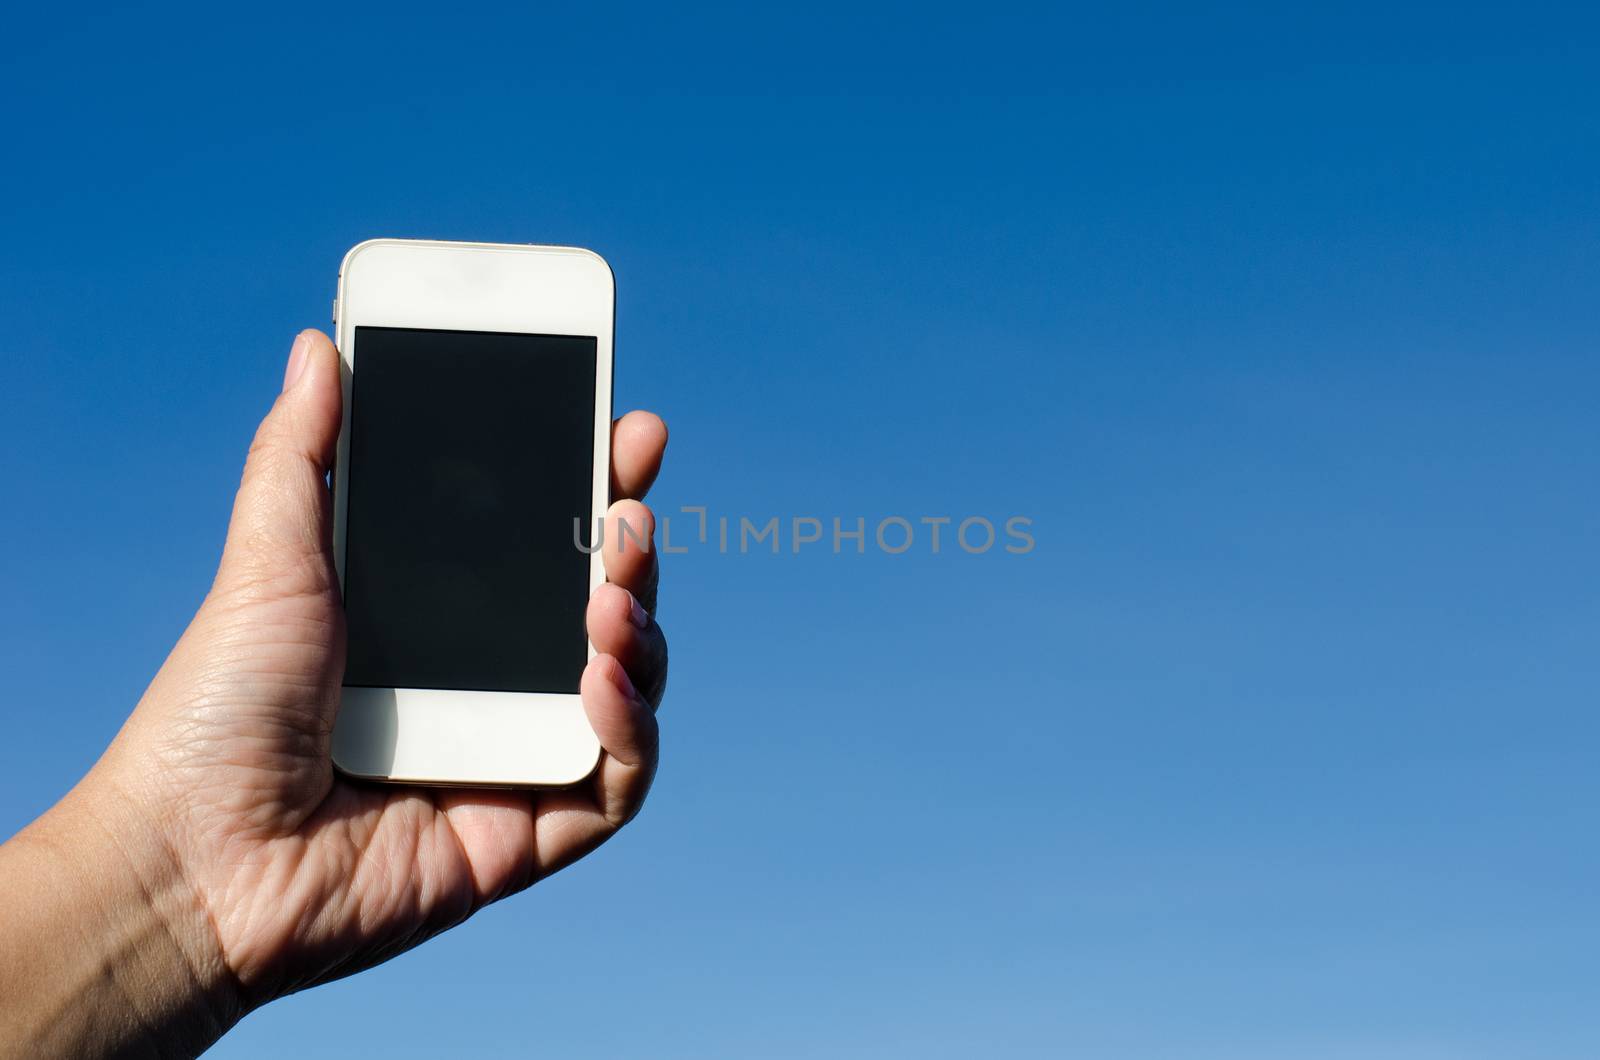 Handle the phone on the sky by photobyphotoboy